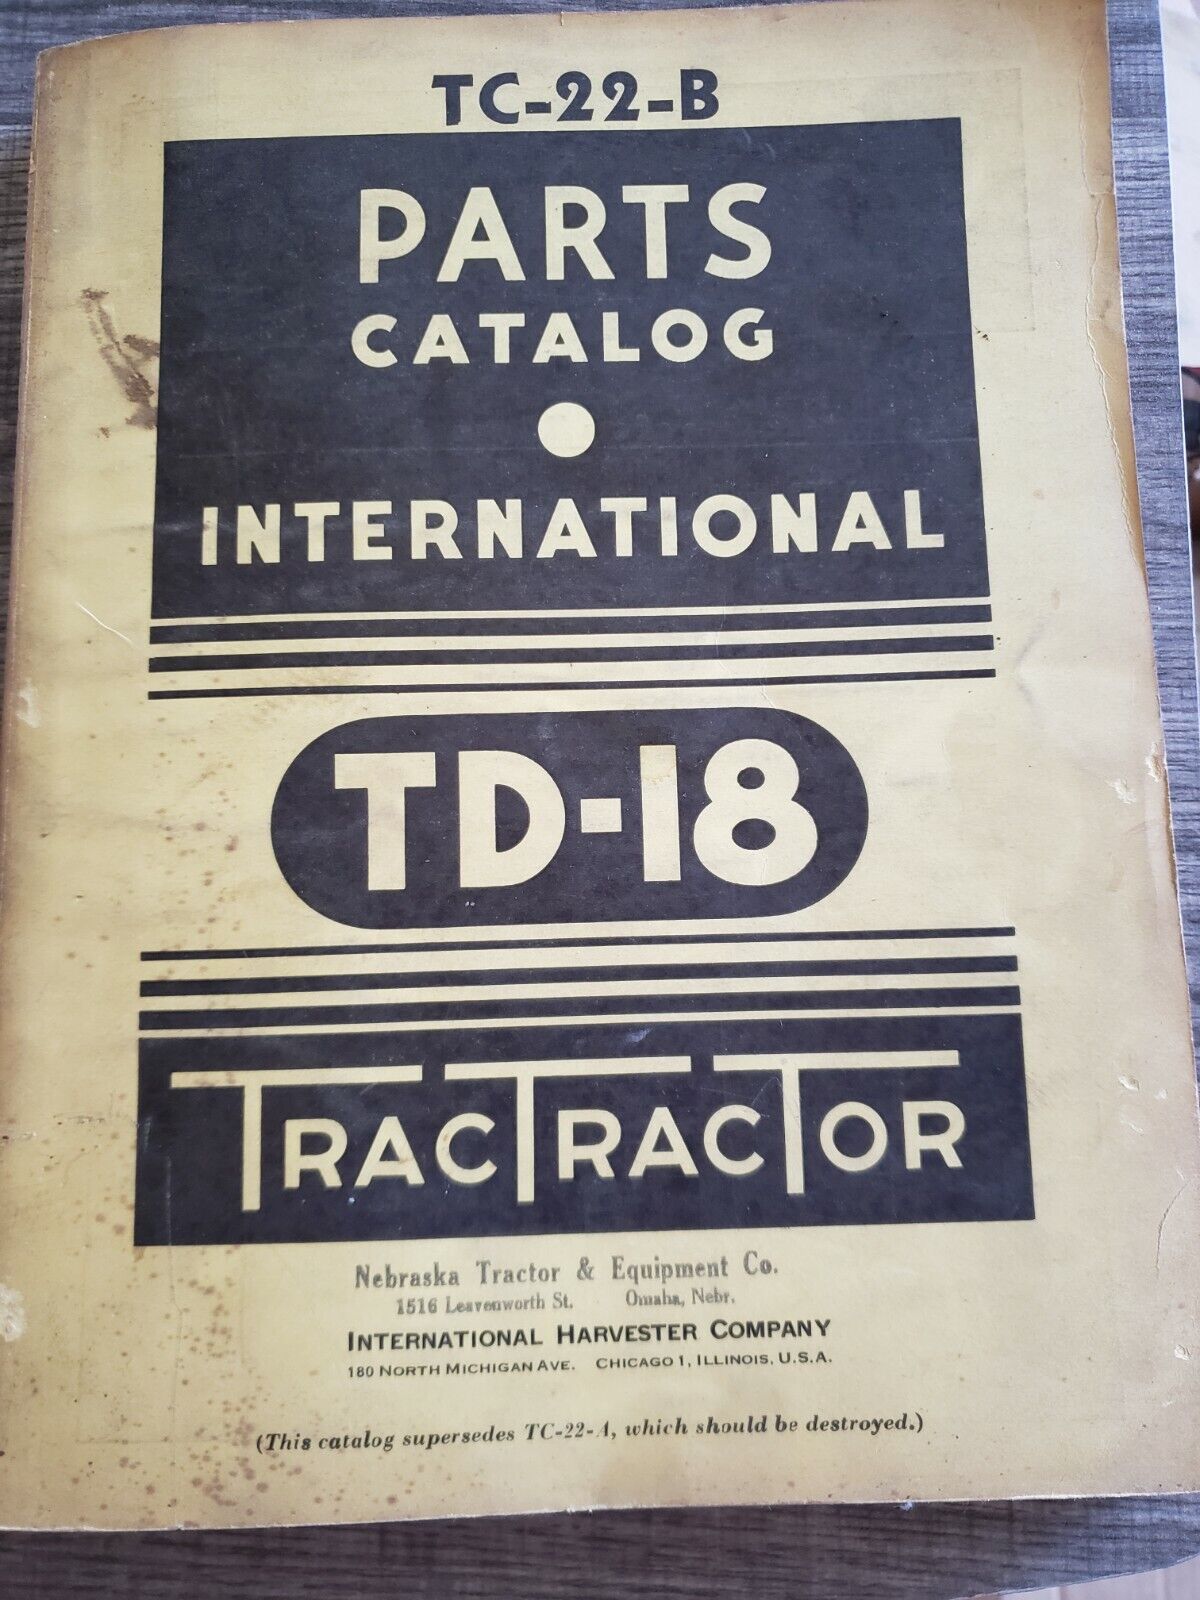 International Harvester TD-18 TracTractor Parts Catalog TC-22-B